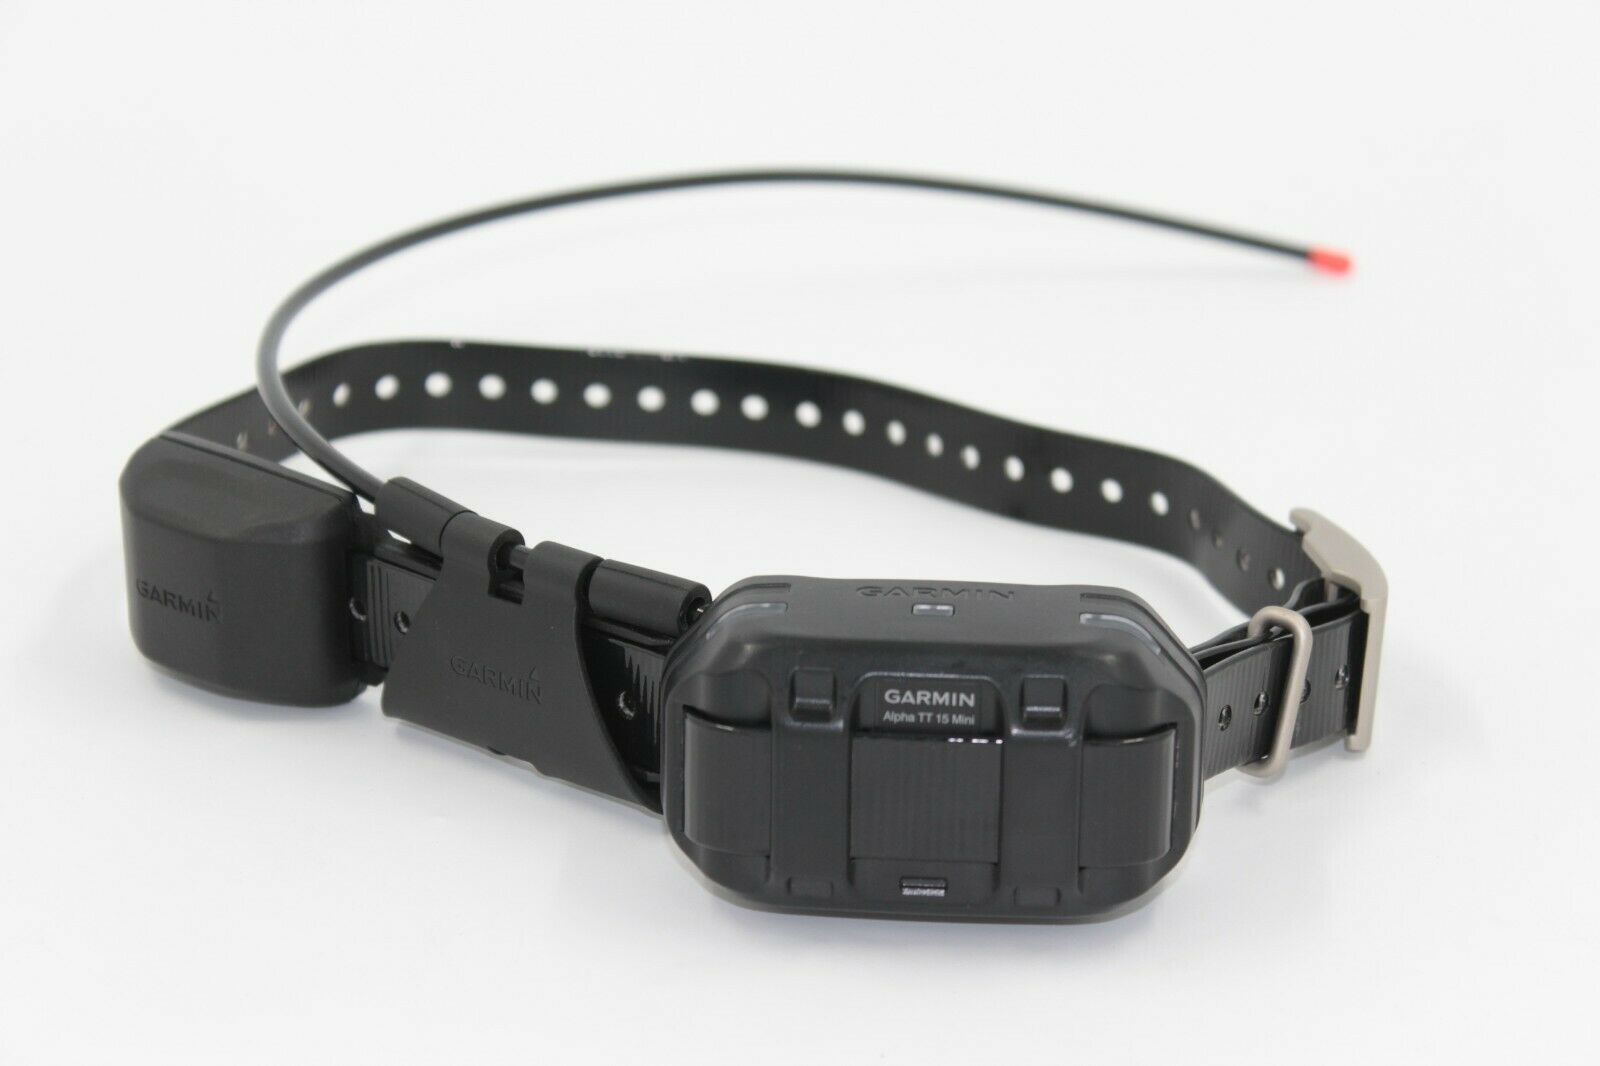 Garmin Tt15 Mini Gps Dog Tracking And Training Collar Device - Read Description!